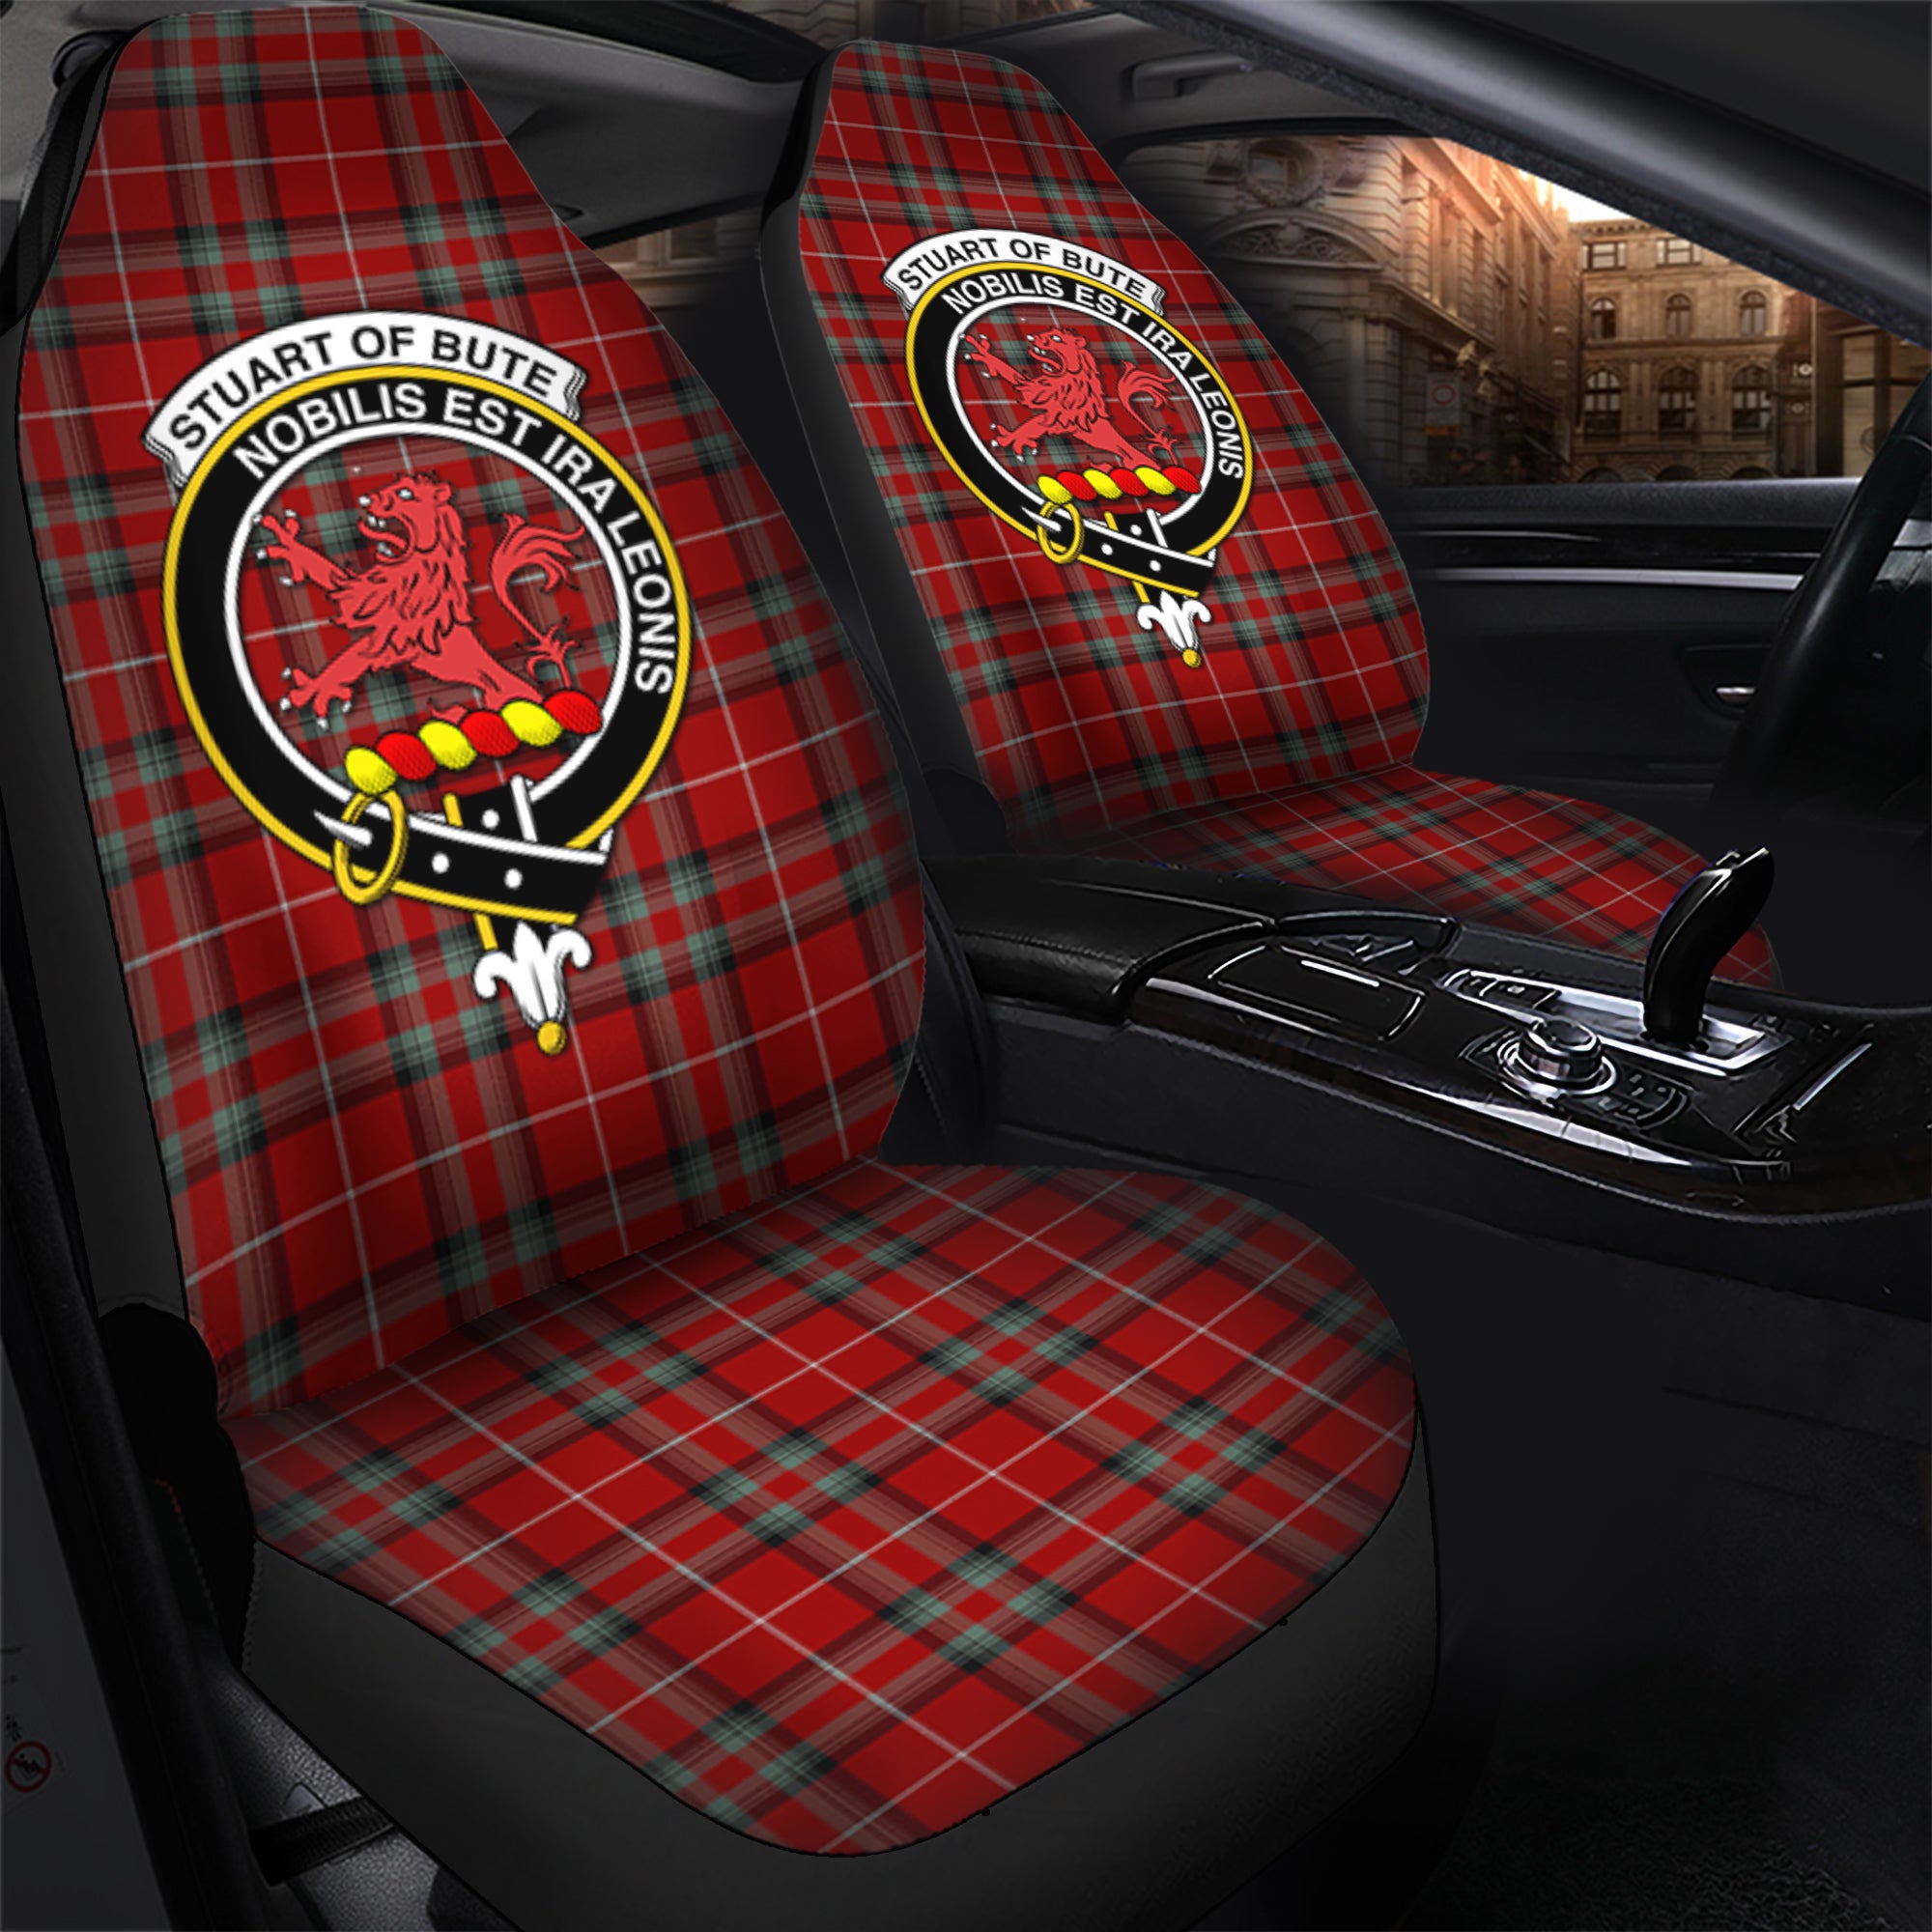 Stuart of Bute Clan Tartan Car Seat Cover, Family Crest Tartan Seat Cover TS23